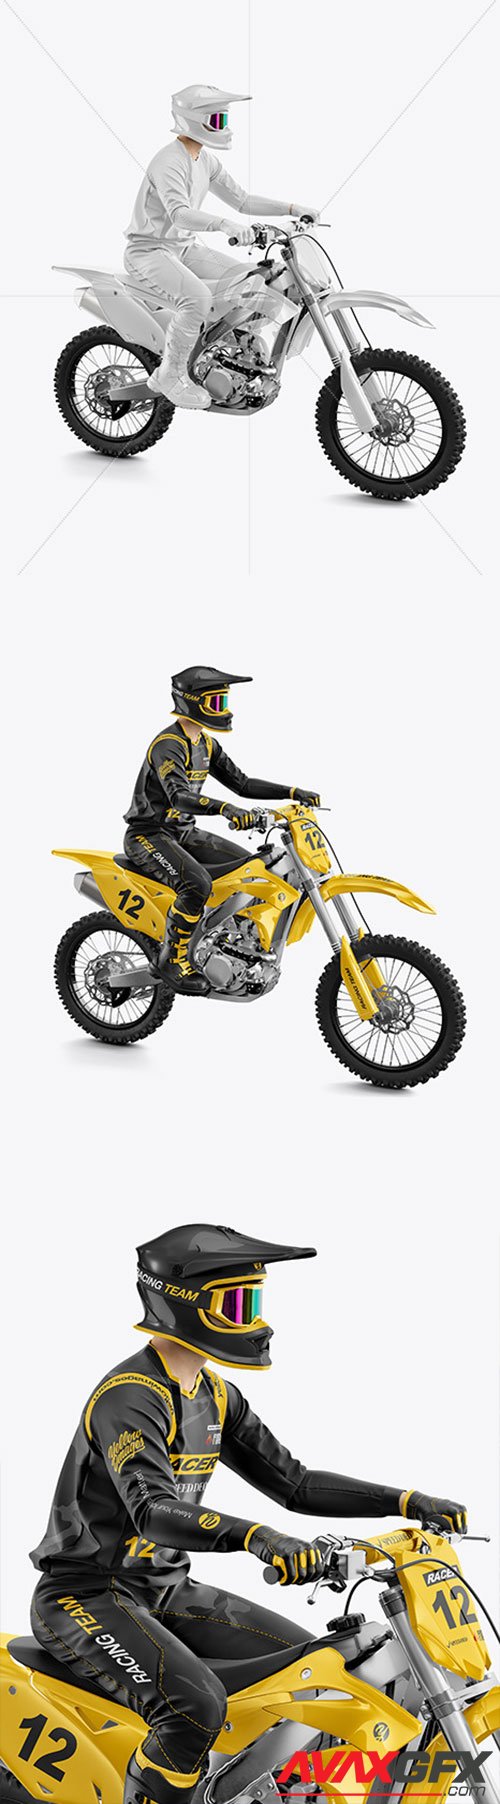 Motocross Racing Kit Mockup 58372